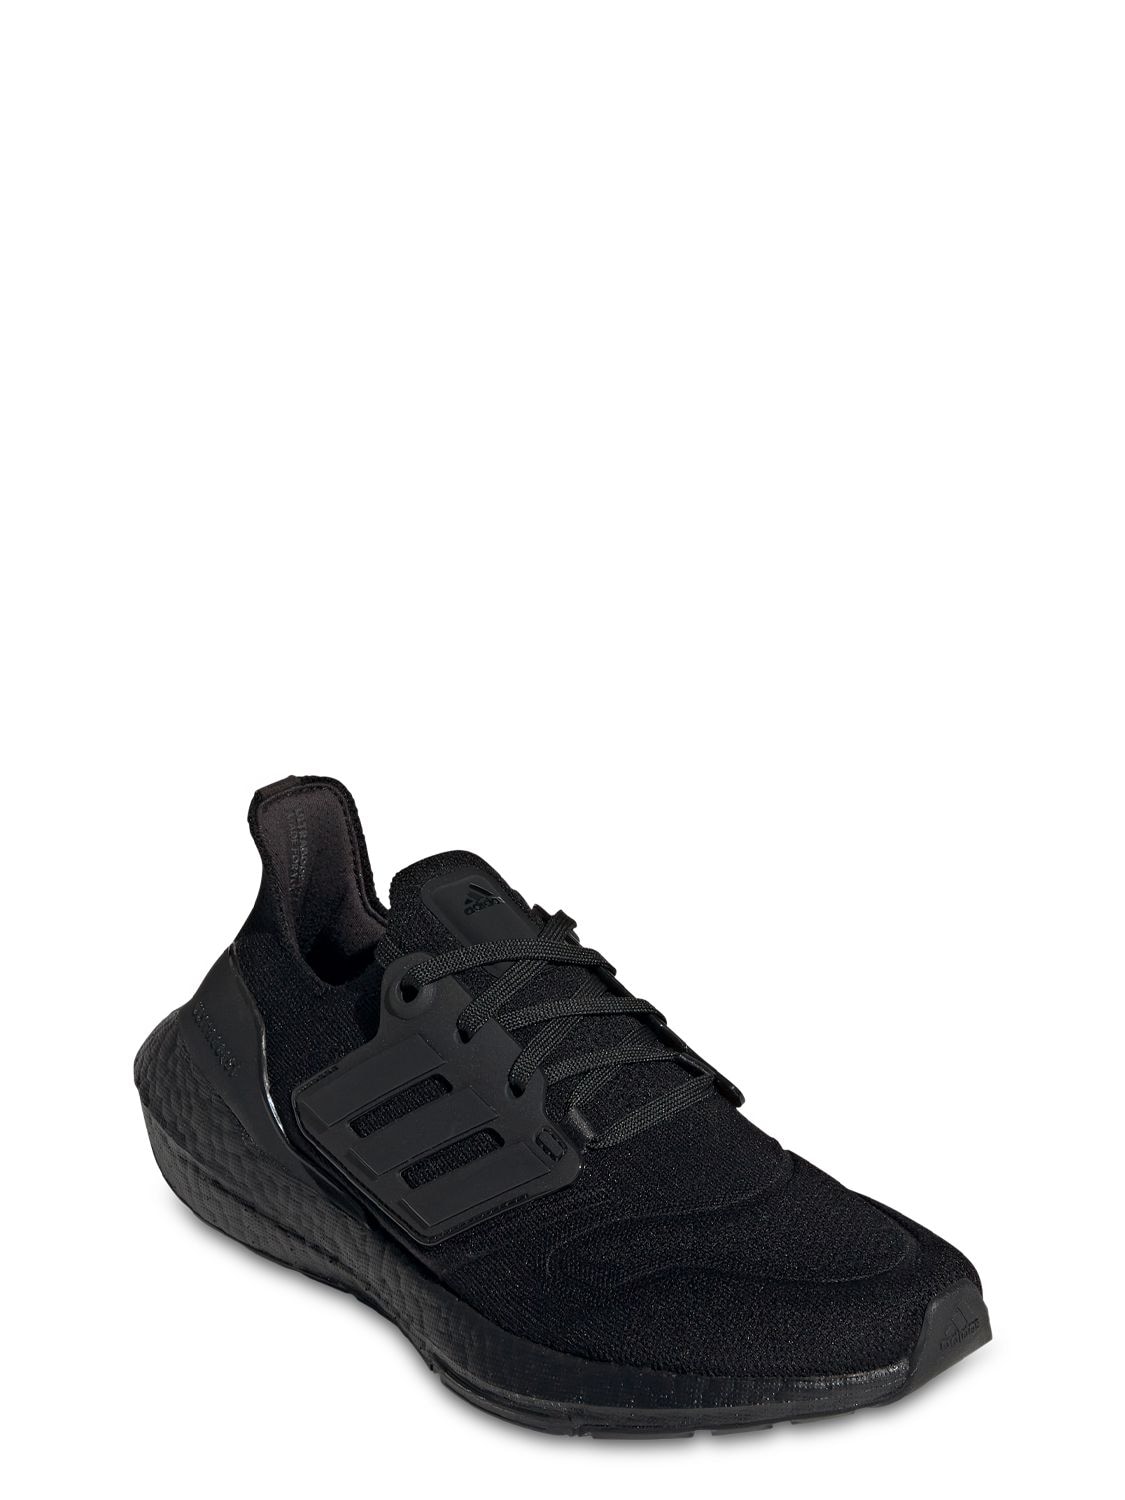 Adidas Originals Black Ultraboost 22 Sneakers In Core Black/core Blac ...